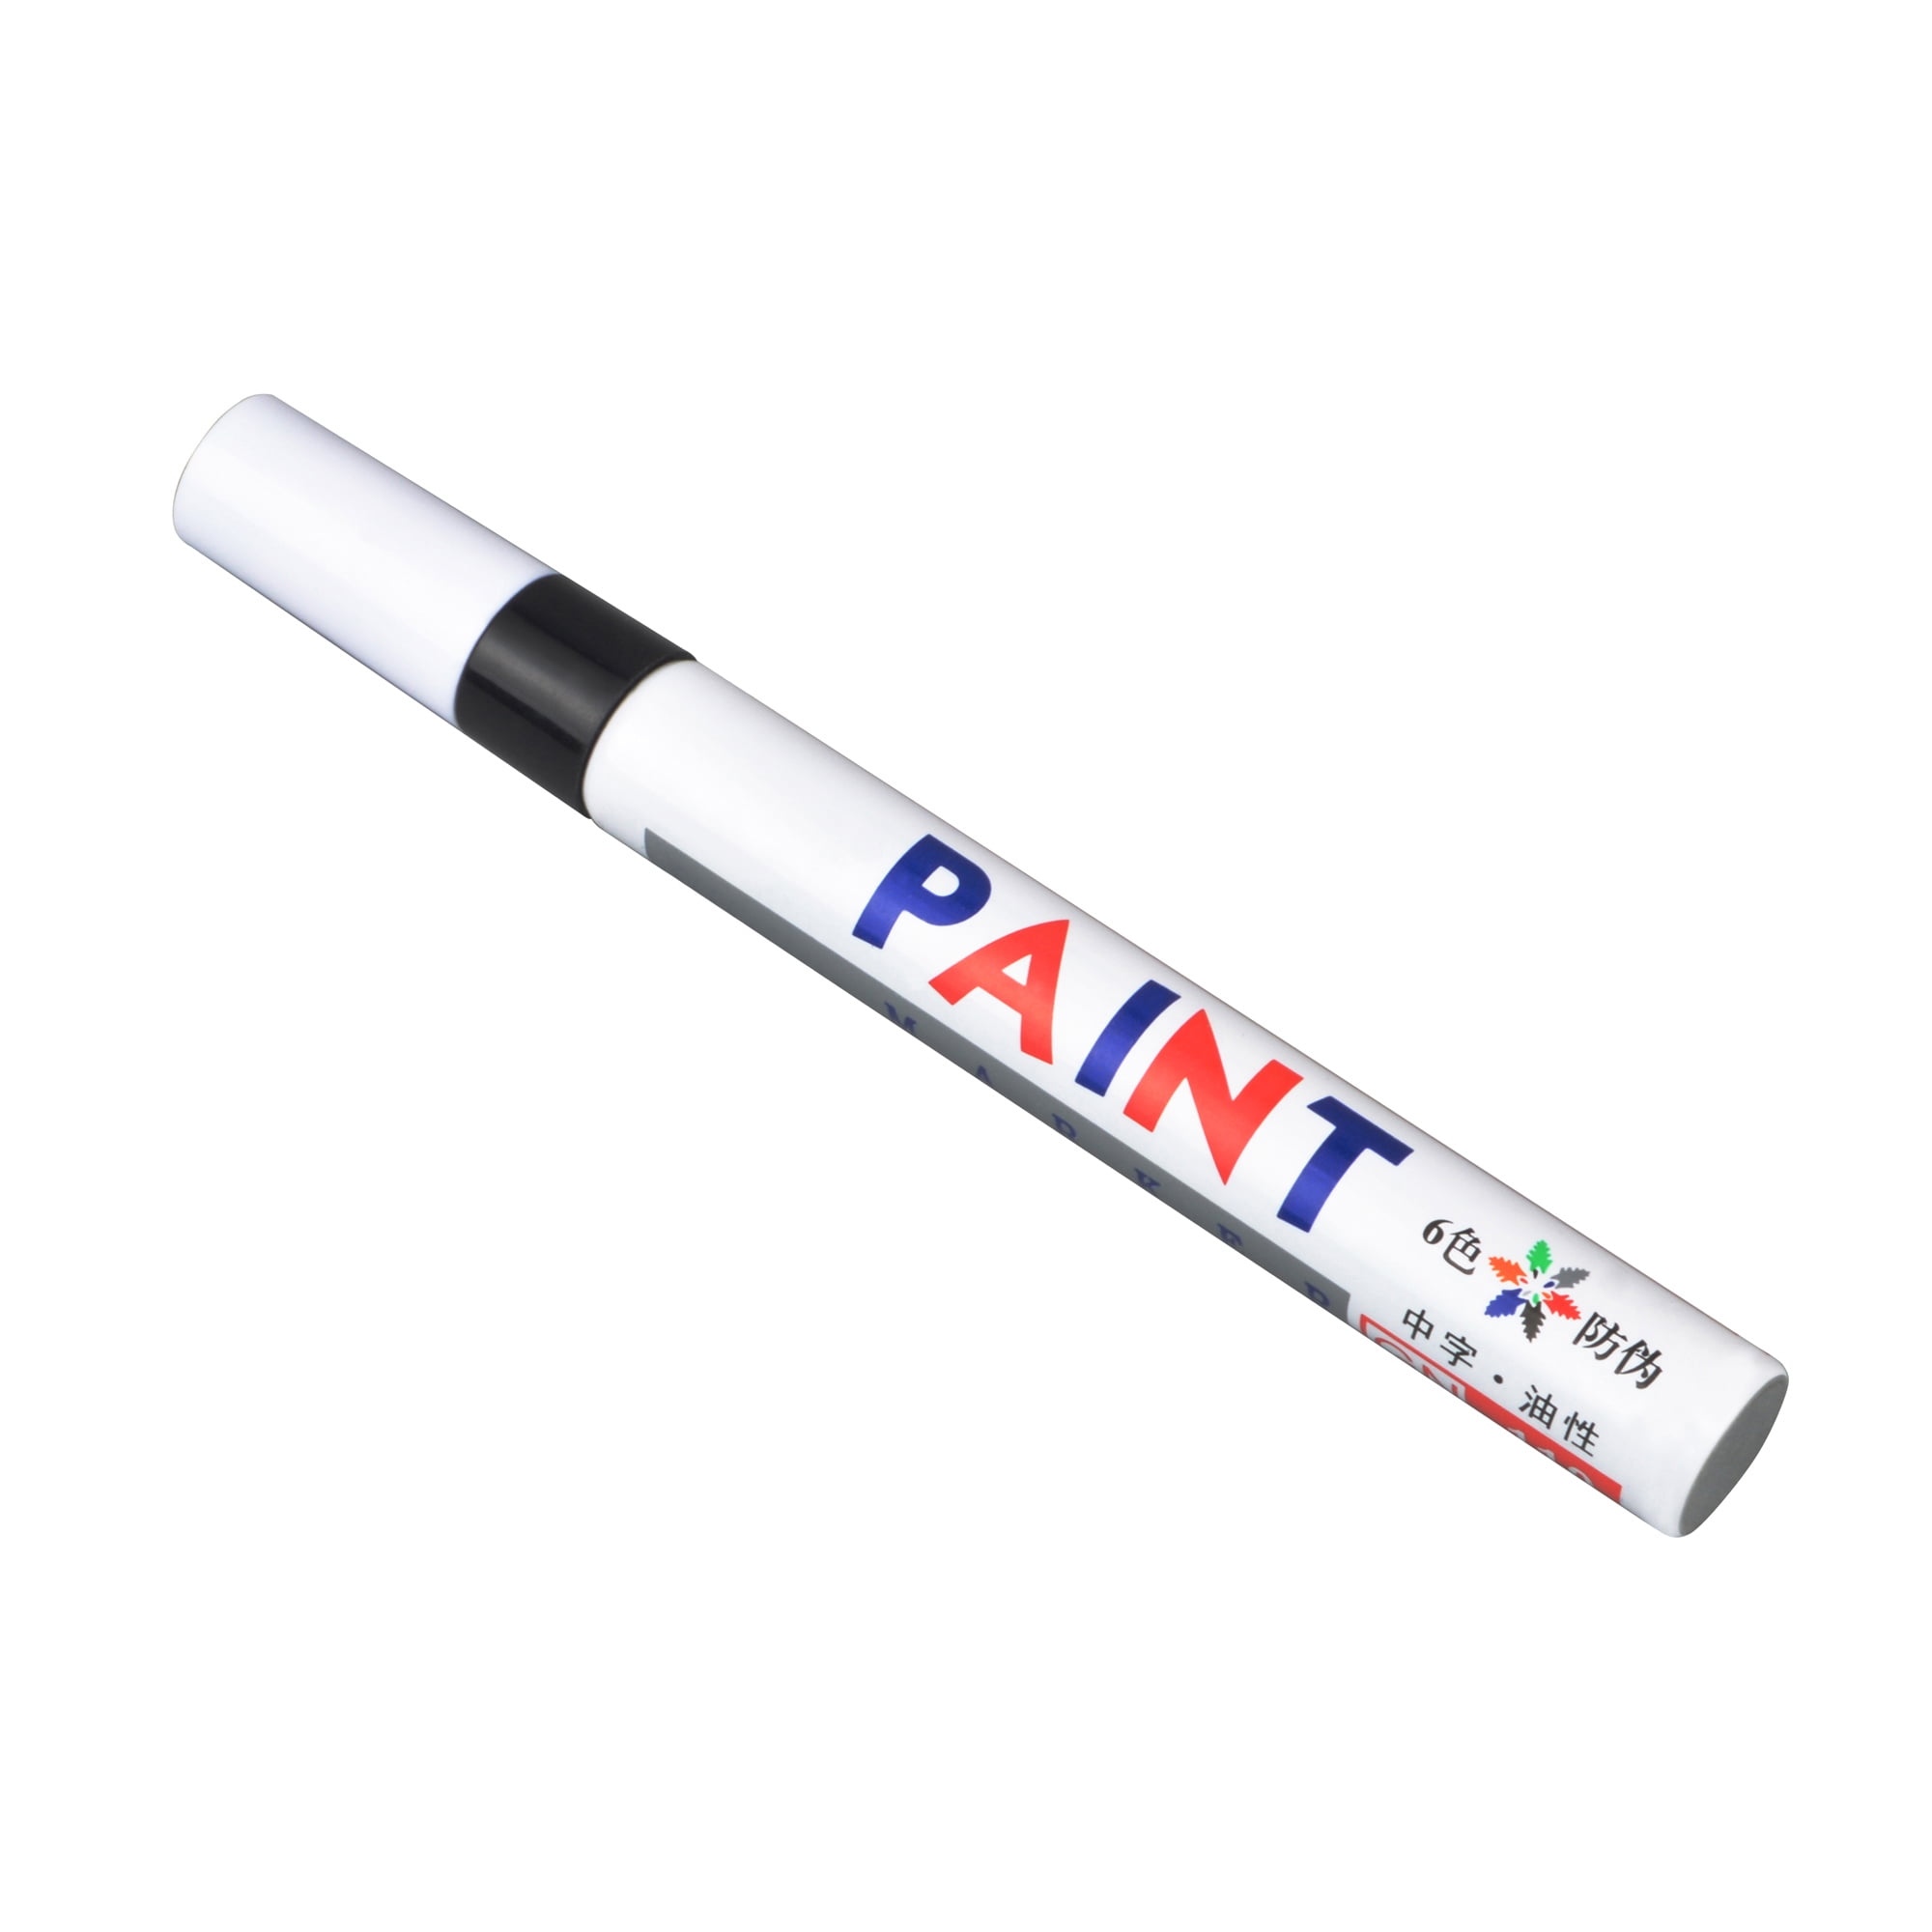 6Pcs/set Black Acrylic Paint Pen for Rock Painting, Stone, Ceramic, Glass,  Wood, Tire, Fabric Metal, Canvas - AliExpress